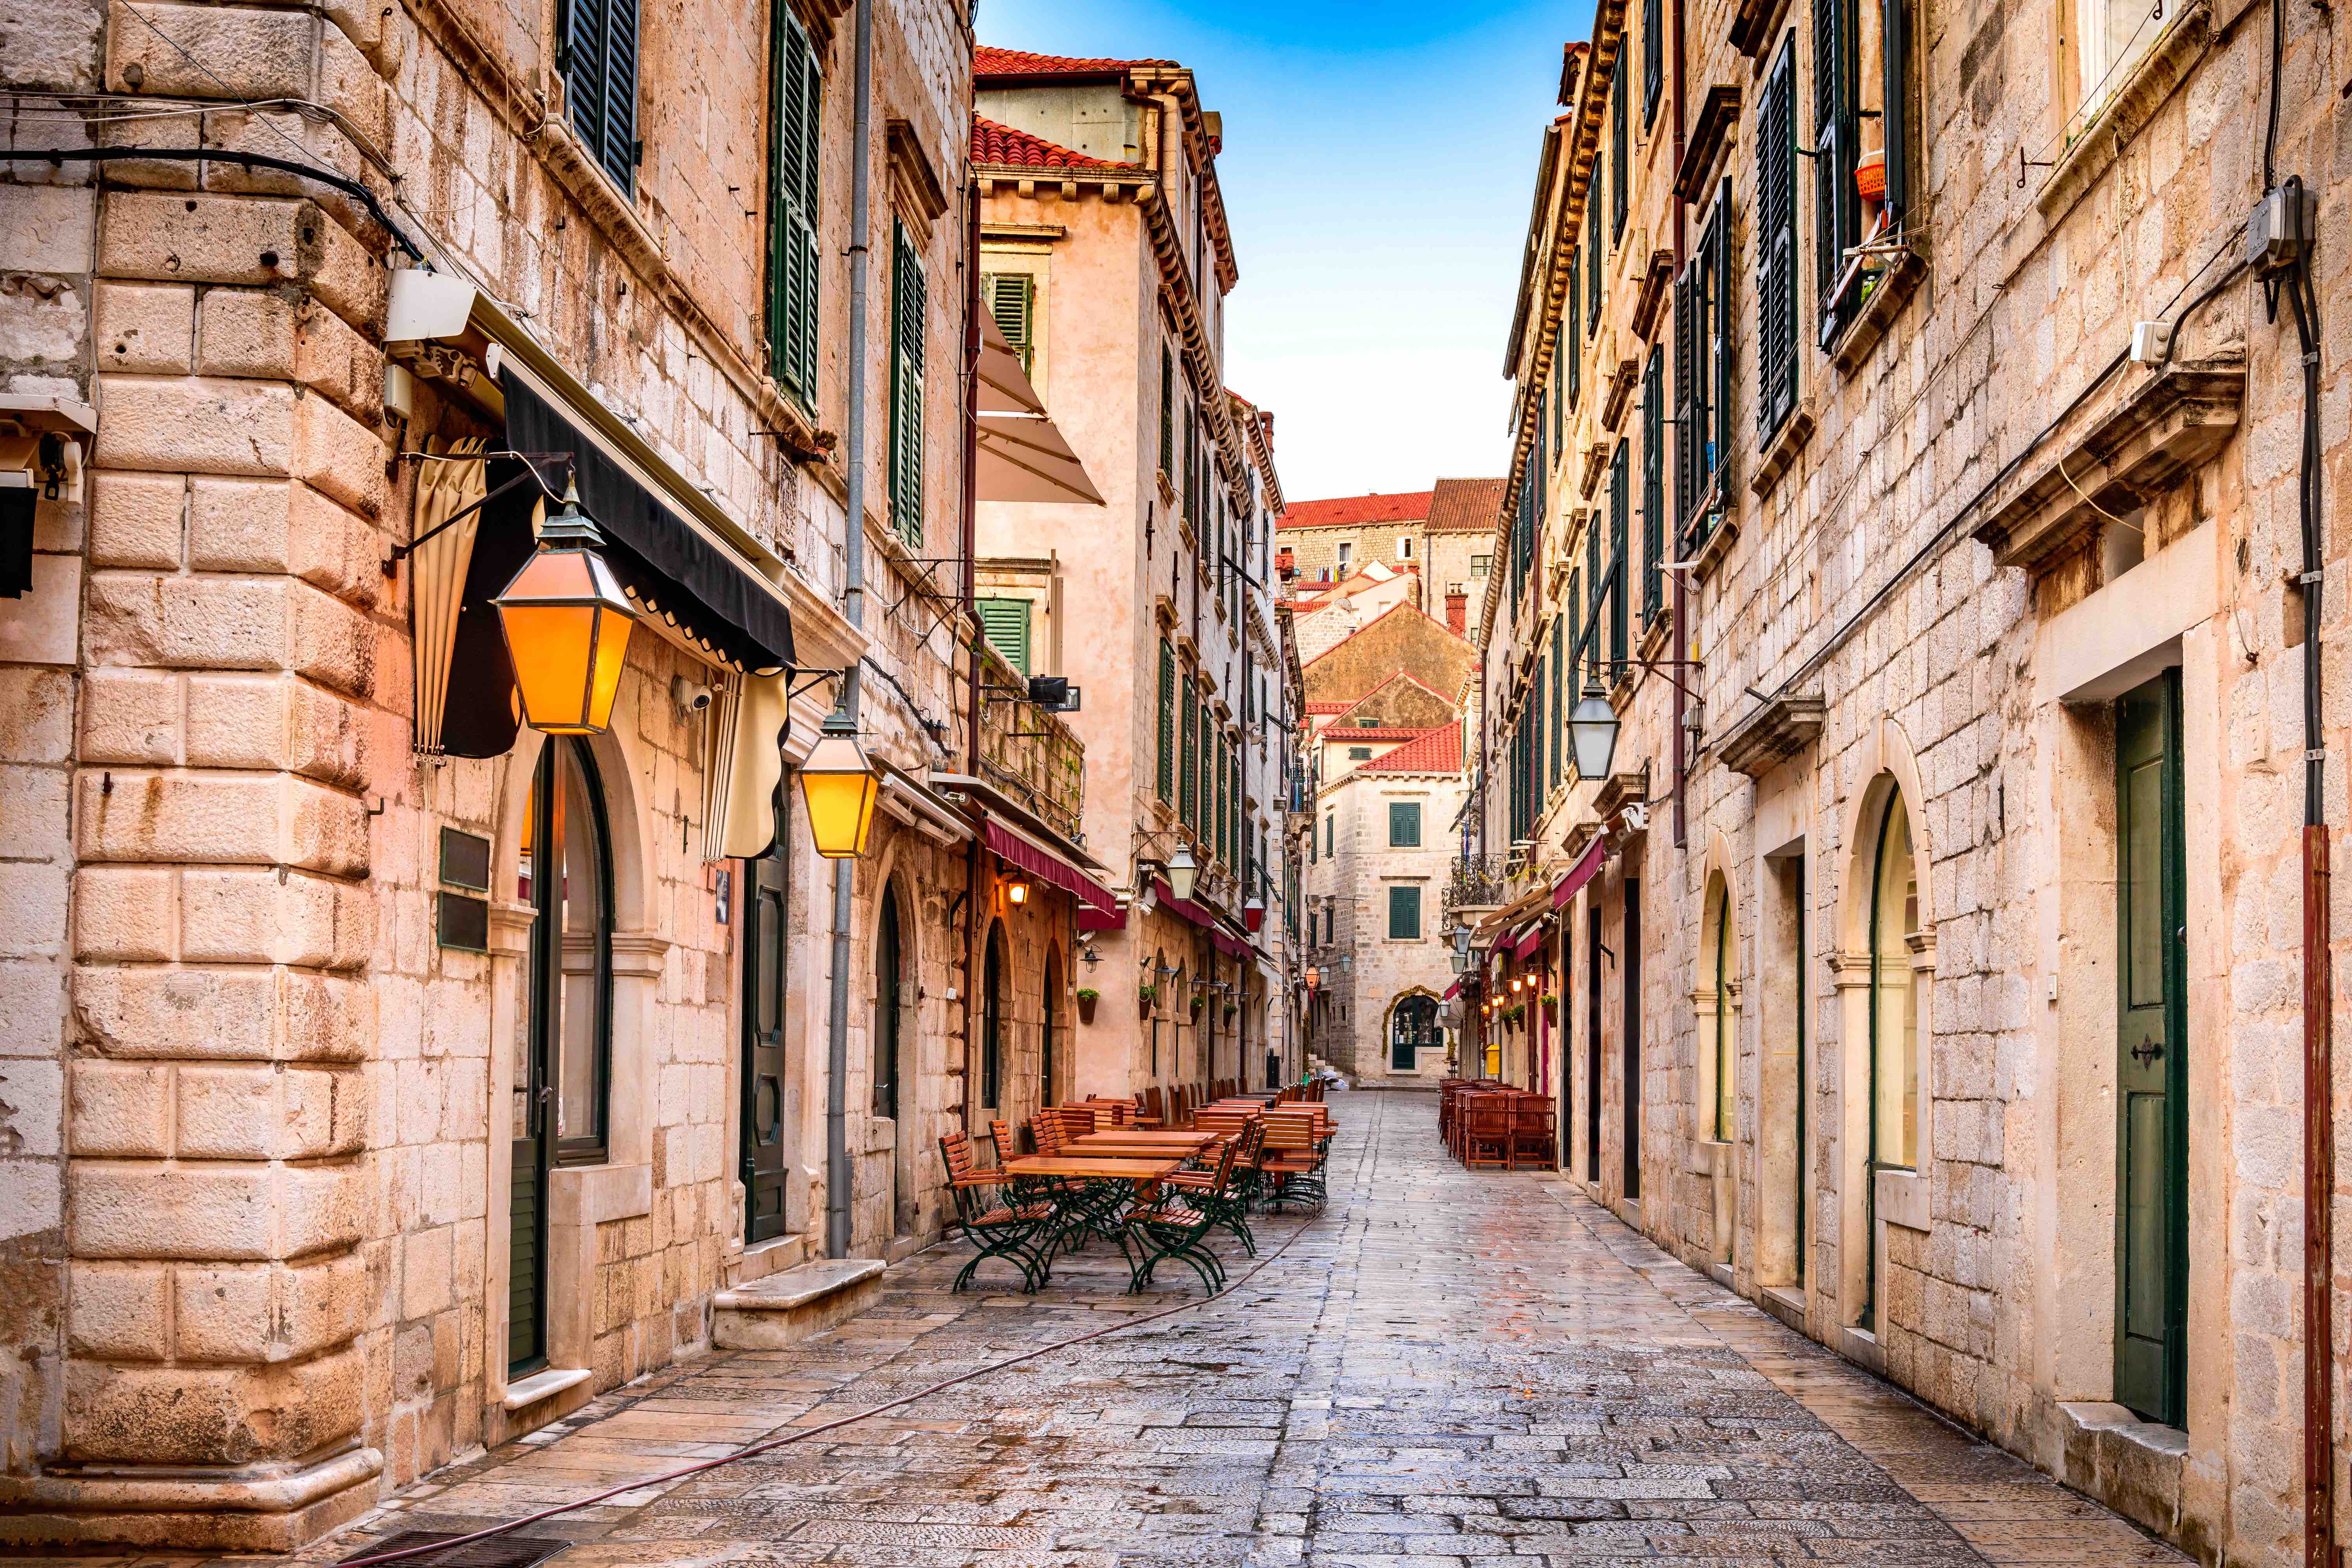 Old City street view in Dubrovnik, Croatia